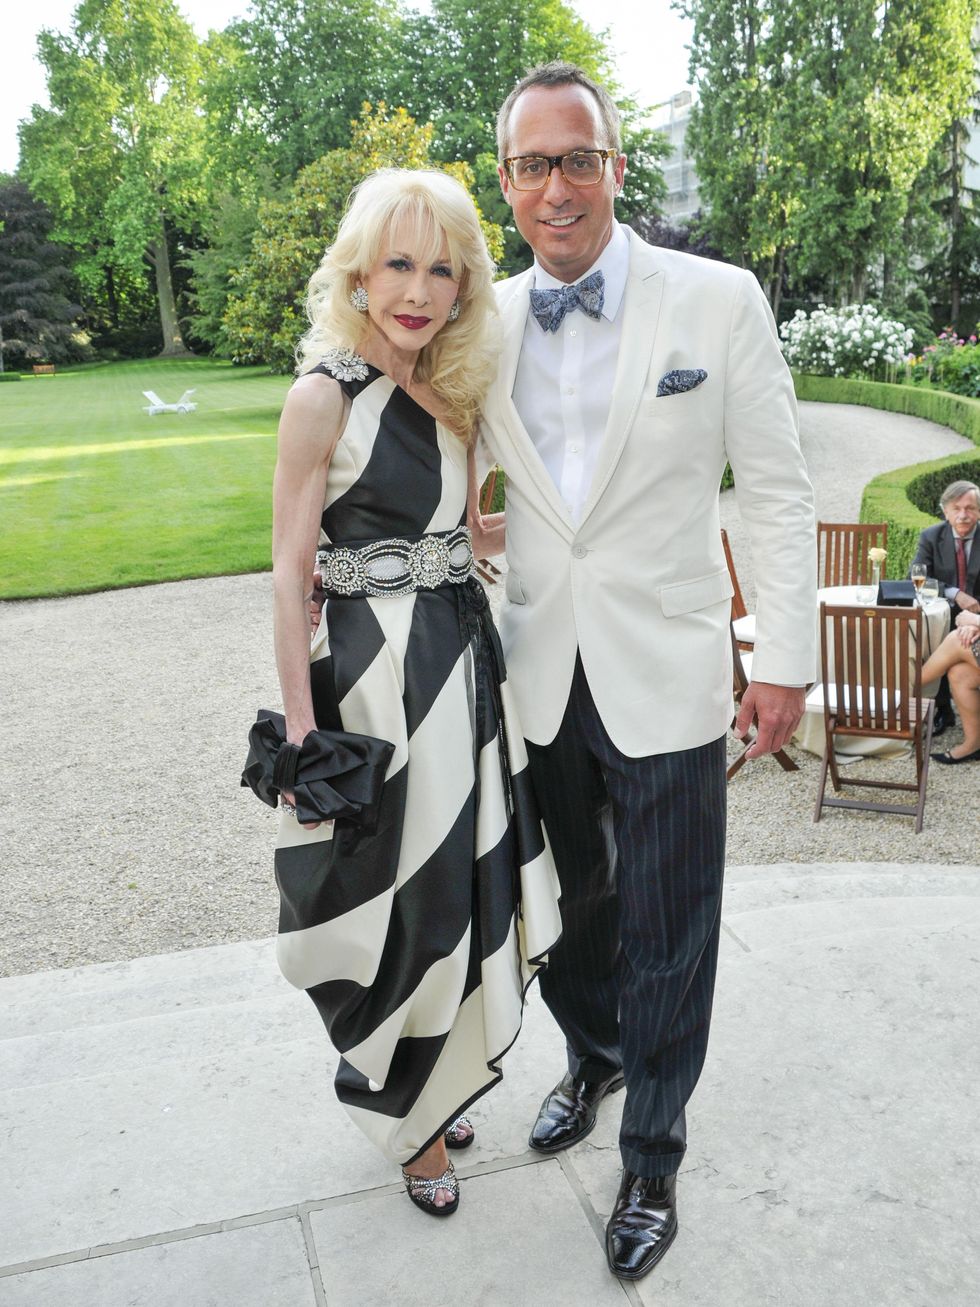 Diane Lokey Farb and Mark Sullivan at US Ambassador dinner in Paris June 2013